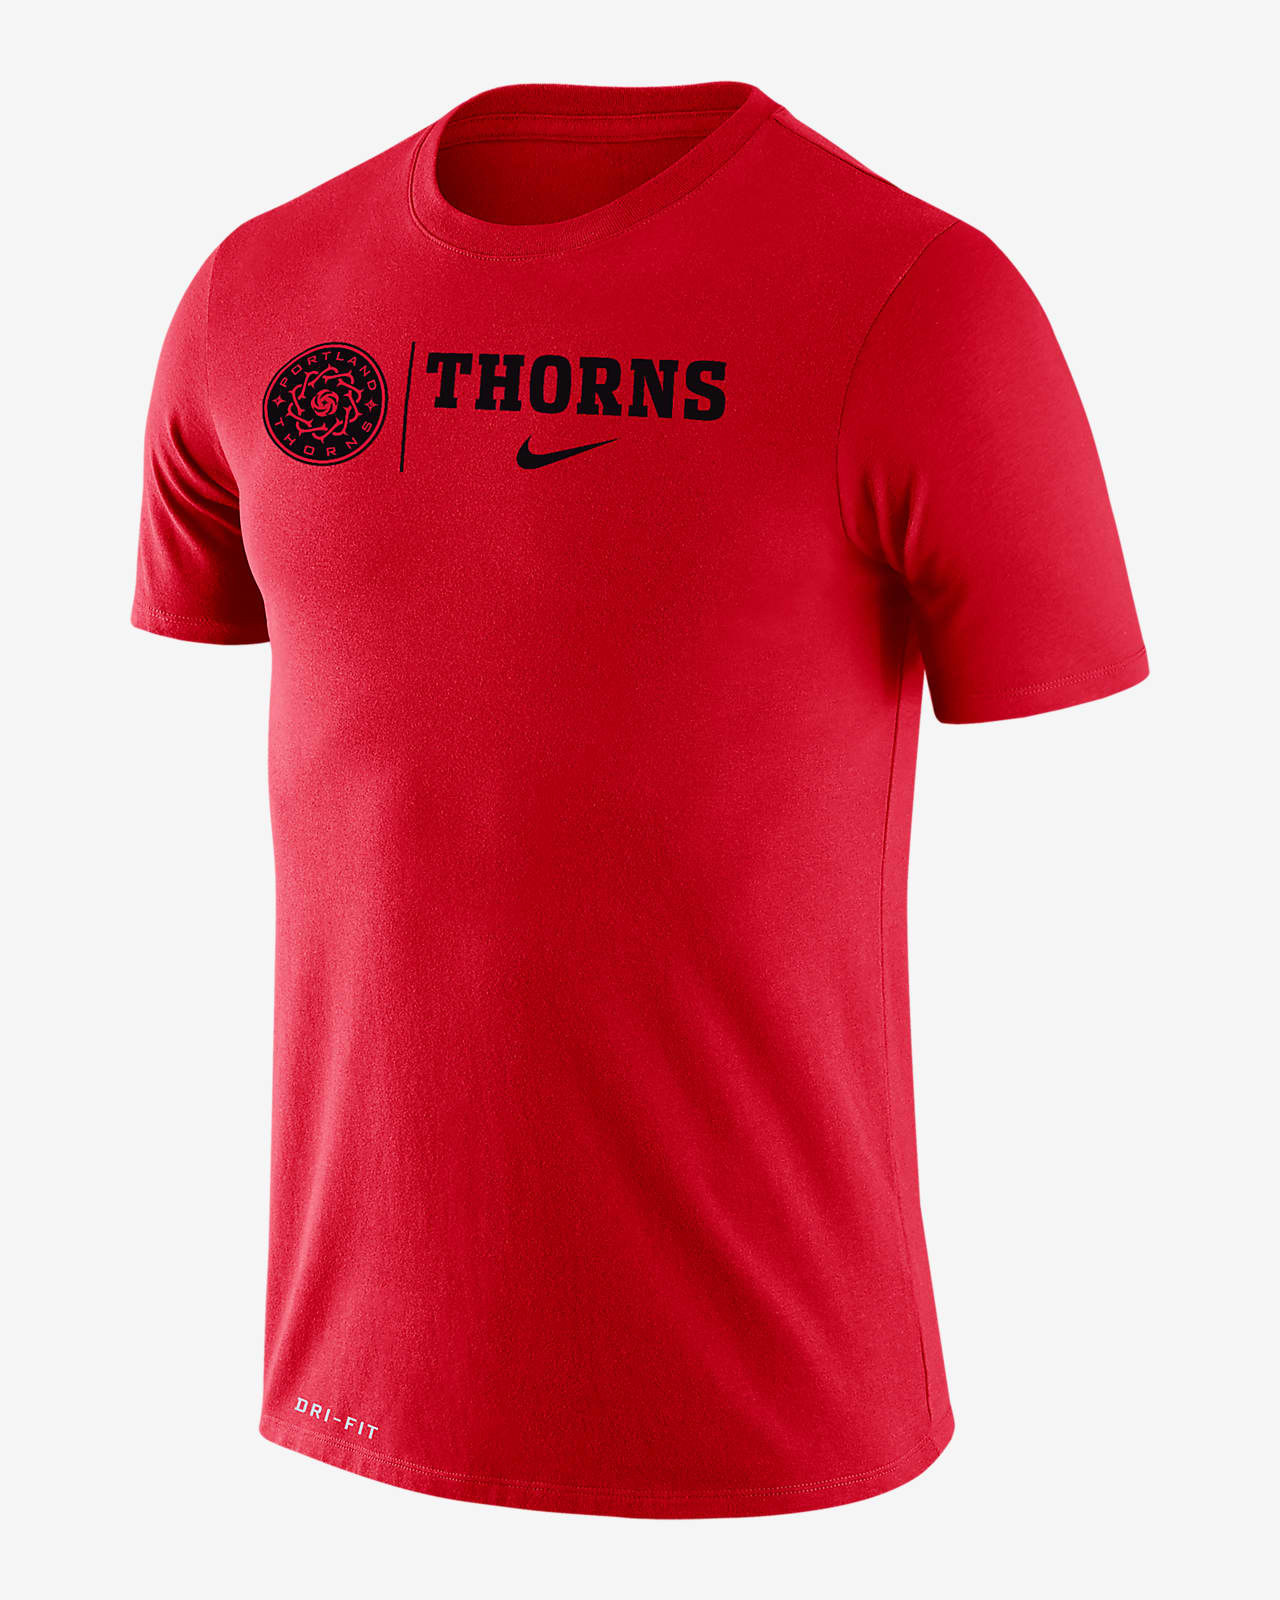 Portland Thorns Legend Men's Nike Dri-FIT Soccer T-Shirt